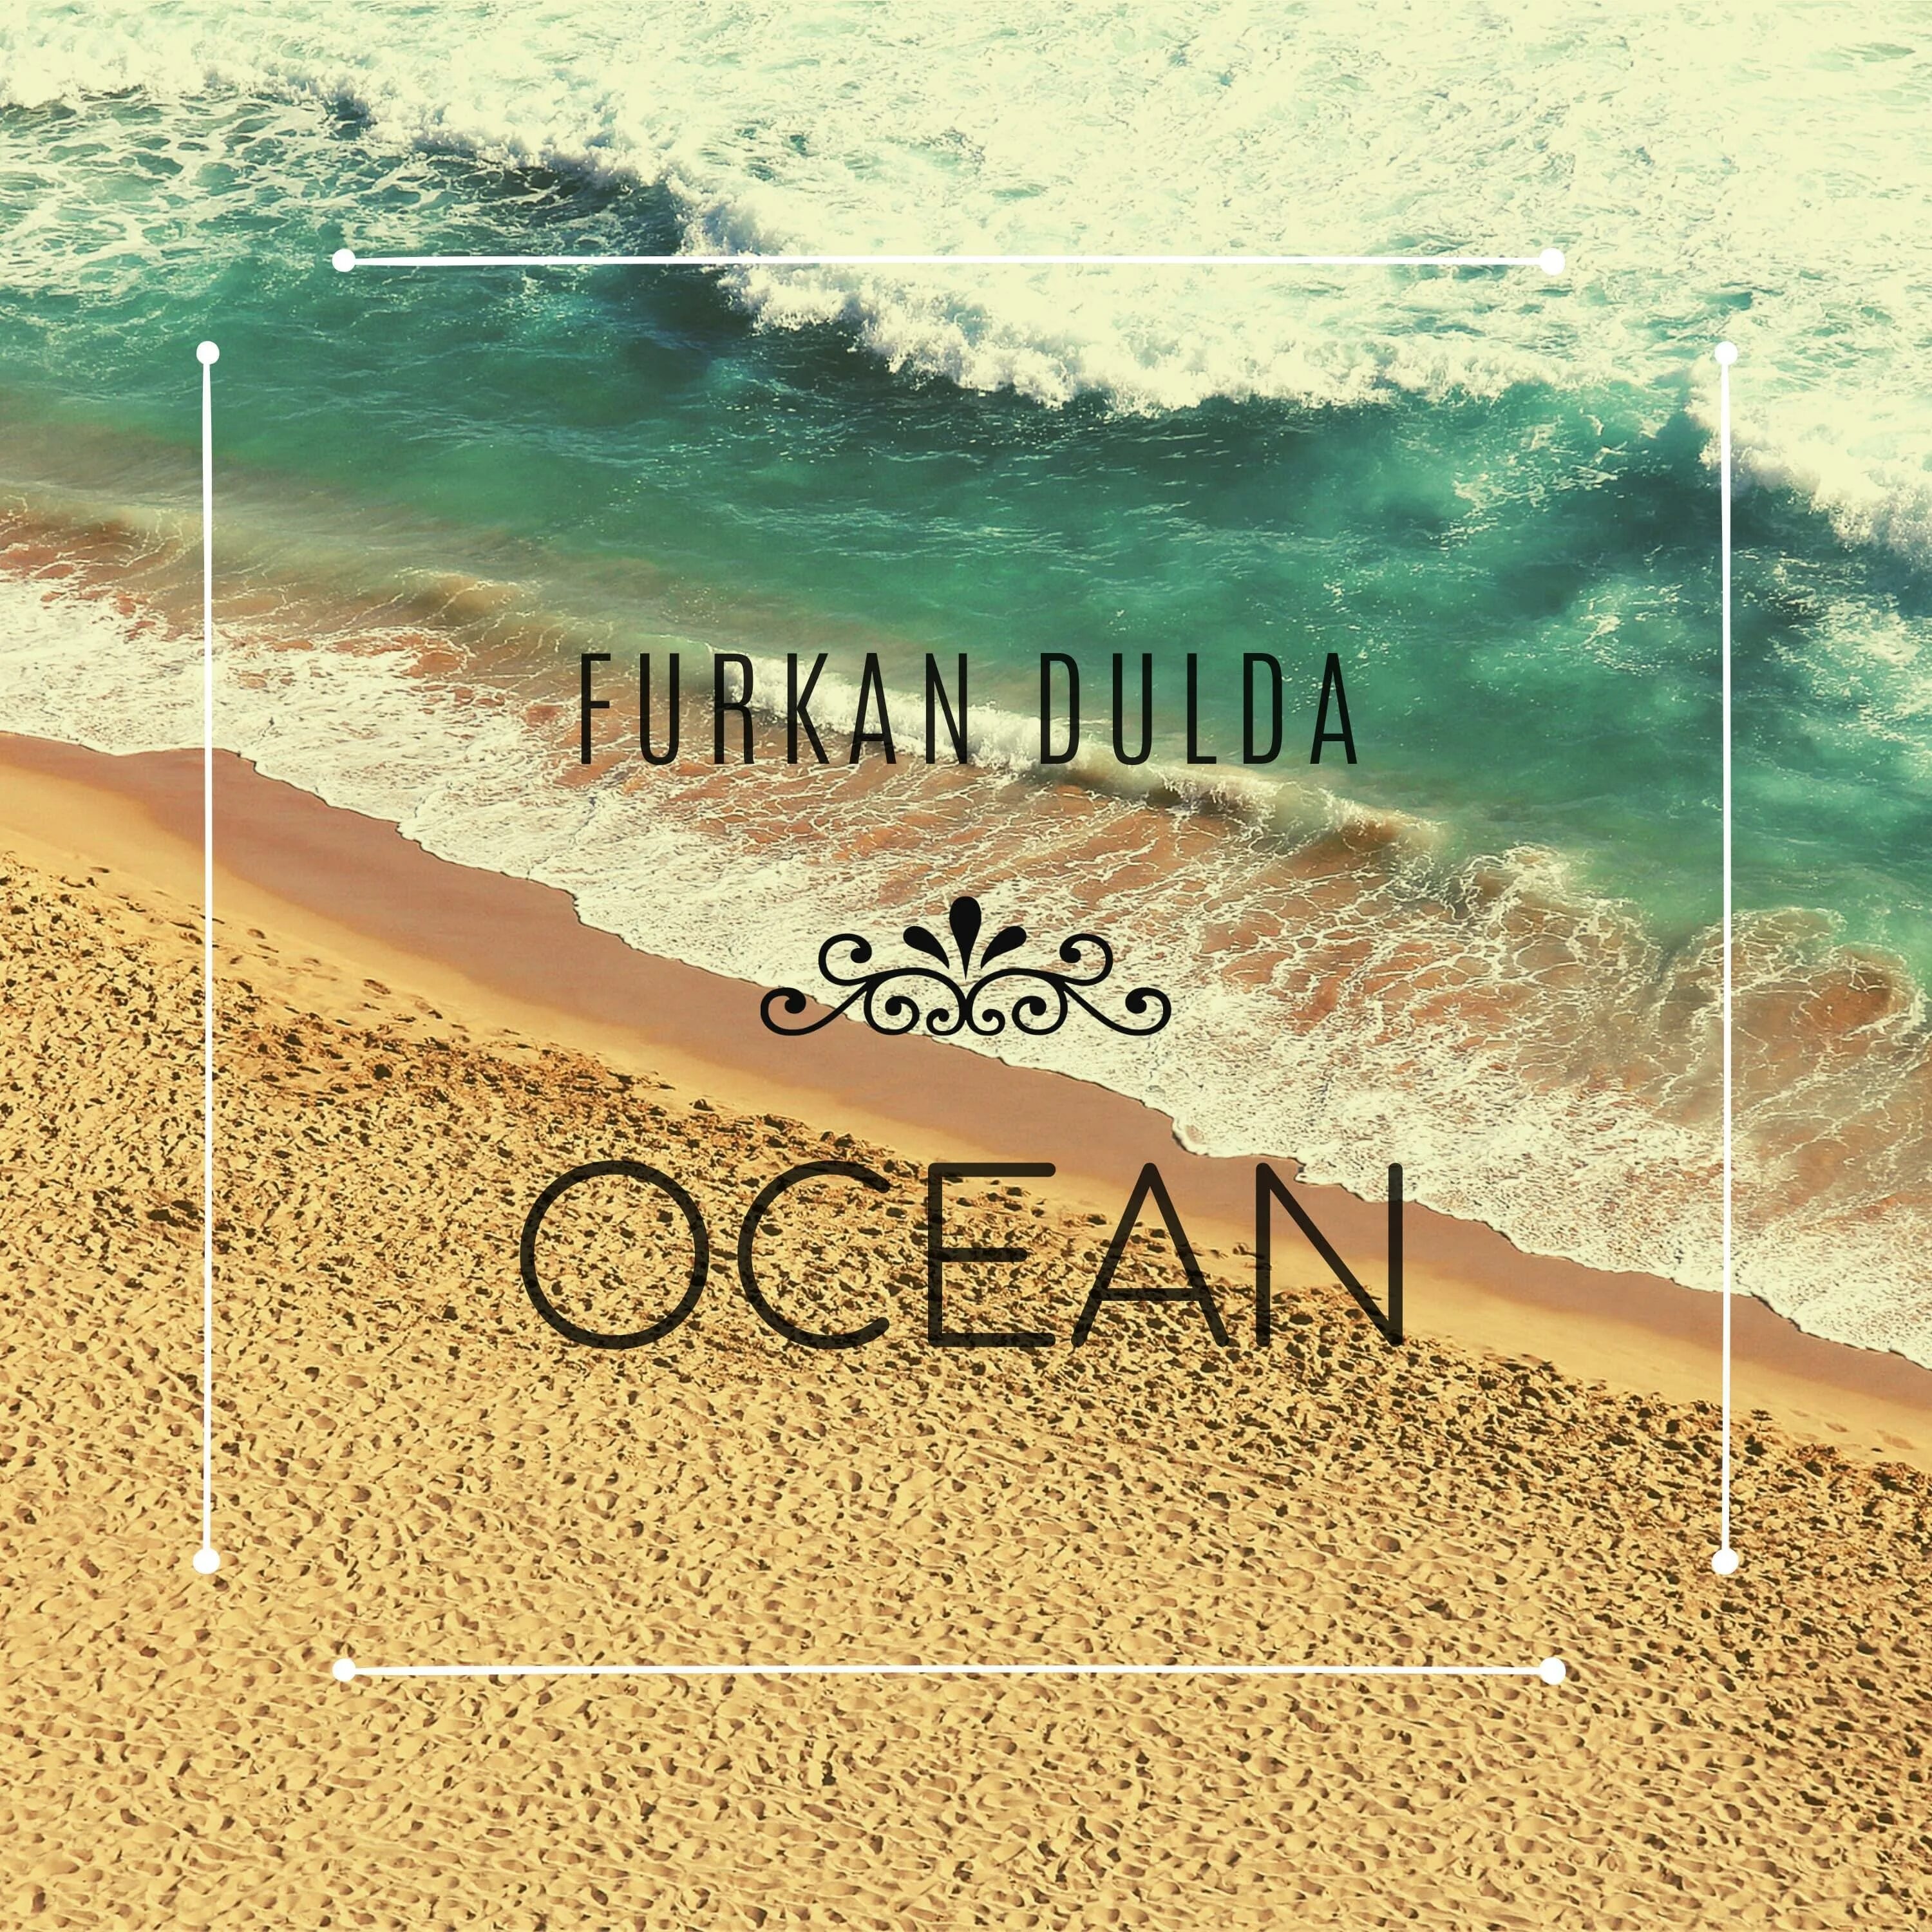 Океан слов. Dulda. I'M guilty - Furkan Dulda 4.41.